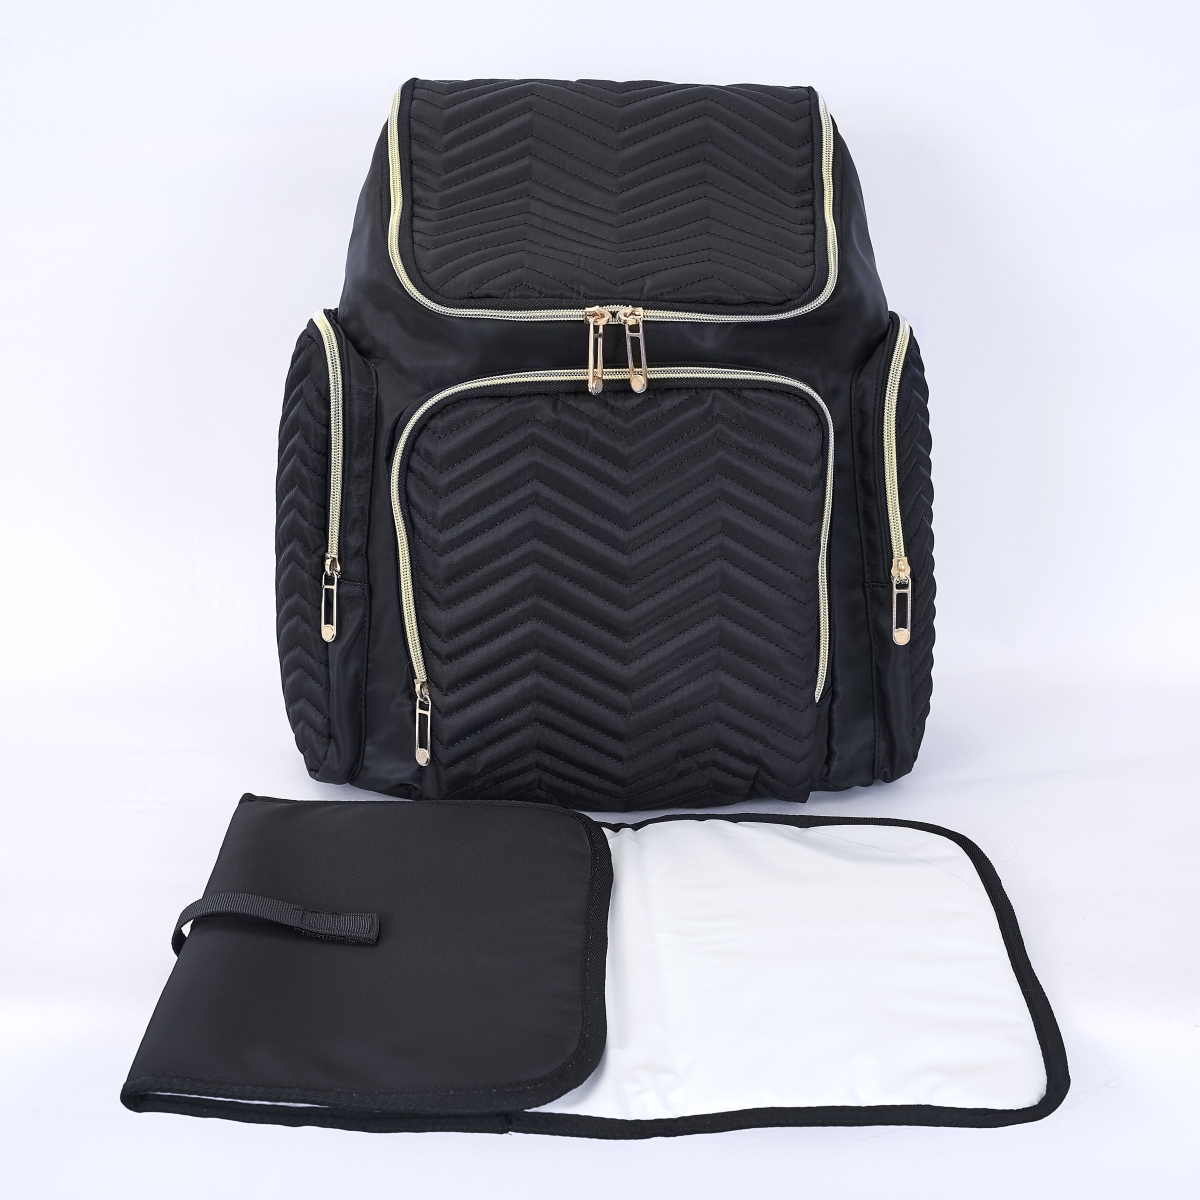 Dp2bk Textured Chevron Baby Diaper Bag, Waterproof With Changing Mat, Pockets & Stroller Straps - Black